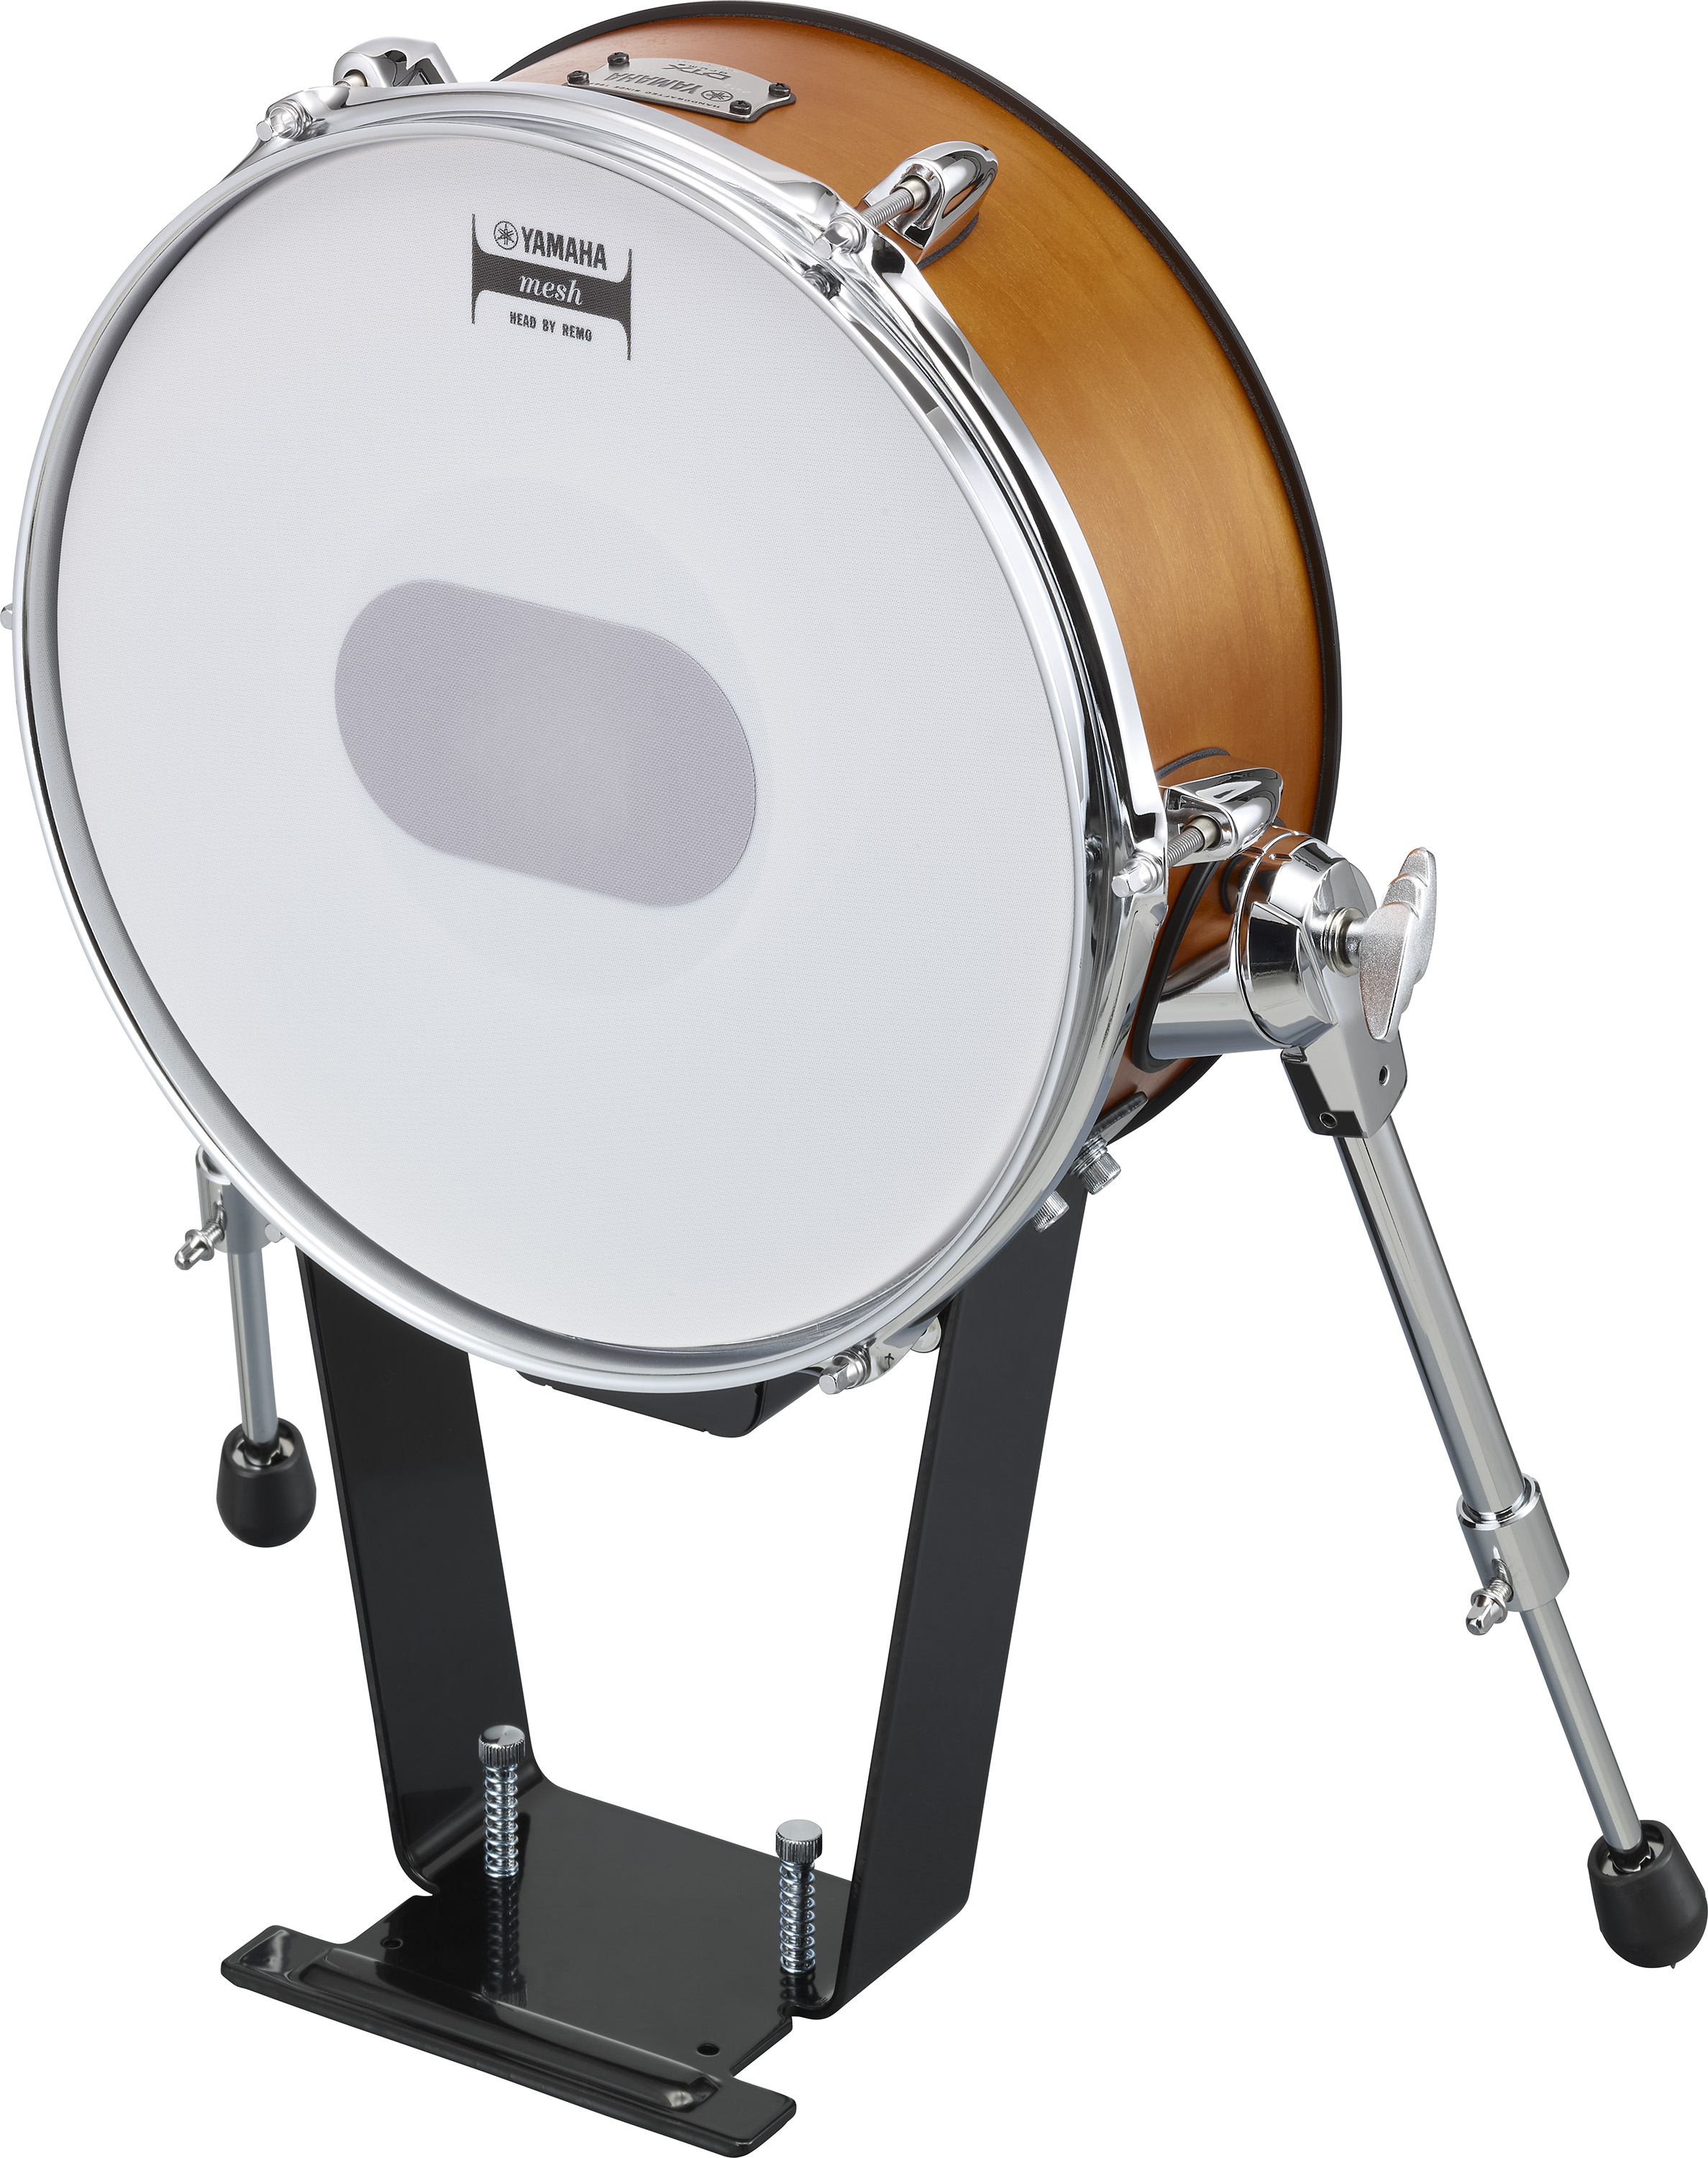 Yamaha Dtx10-kx Electronic Drum Kit Real Wood - Komplett E-Drum Set - Variation 4